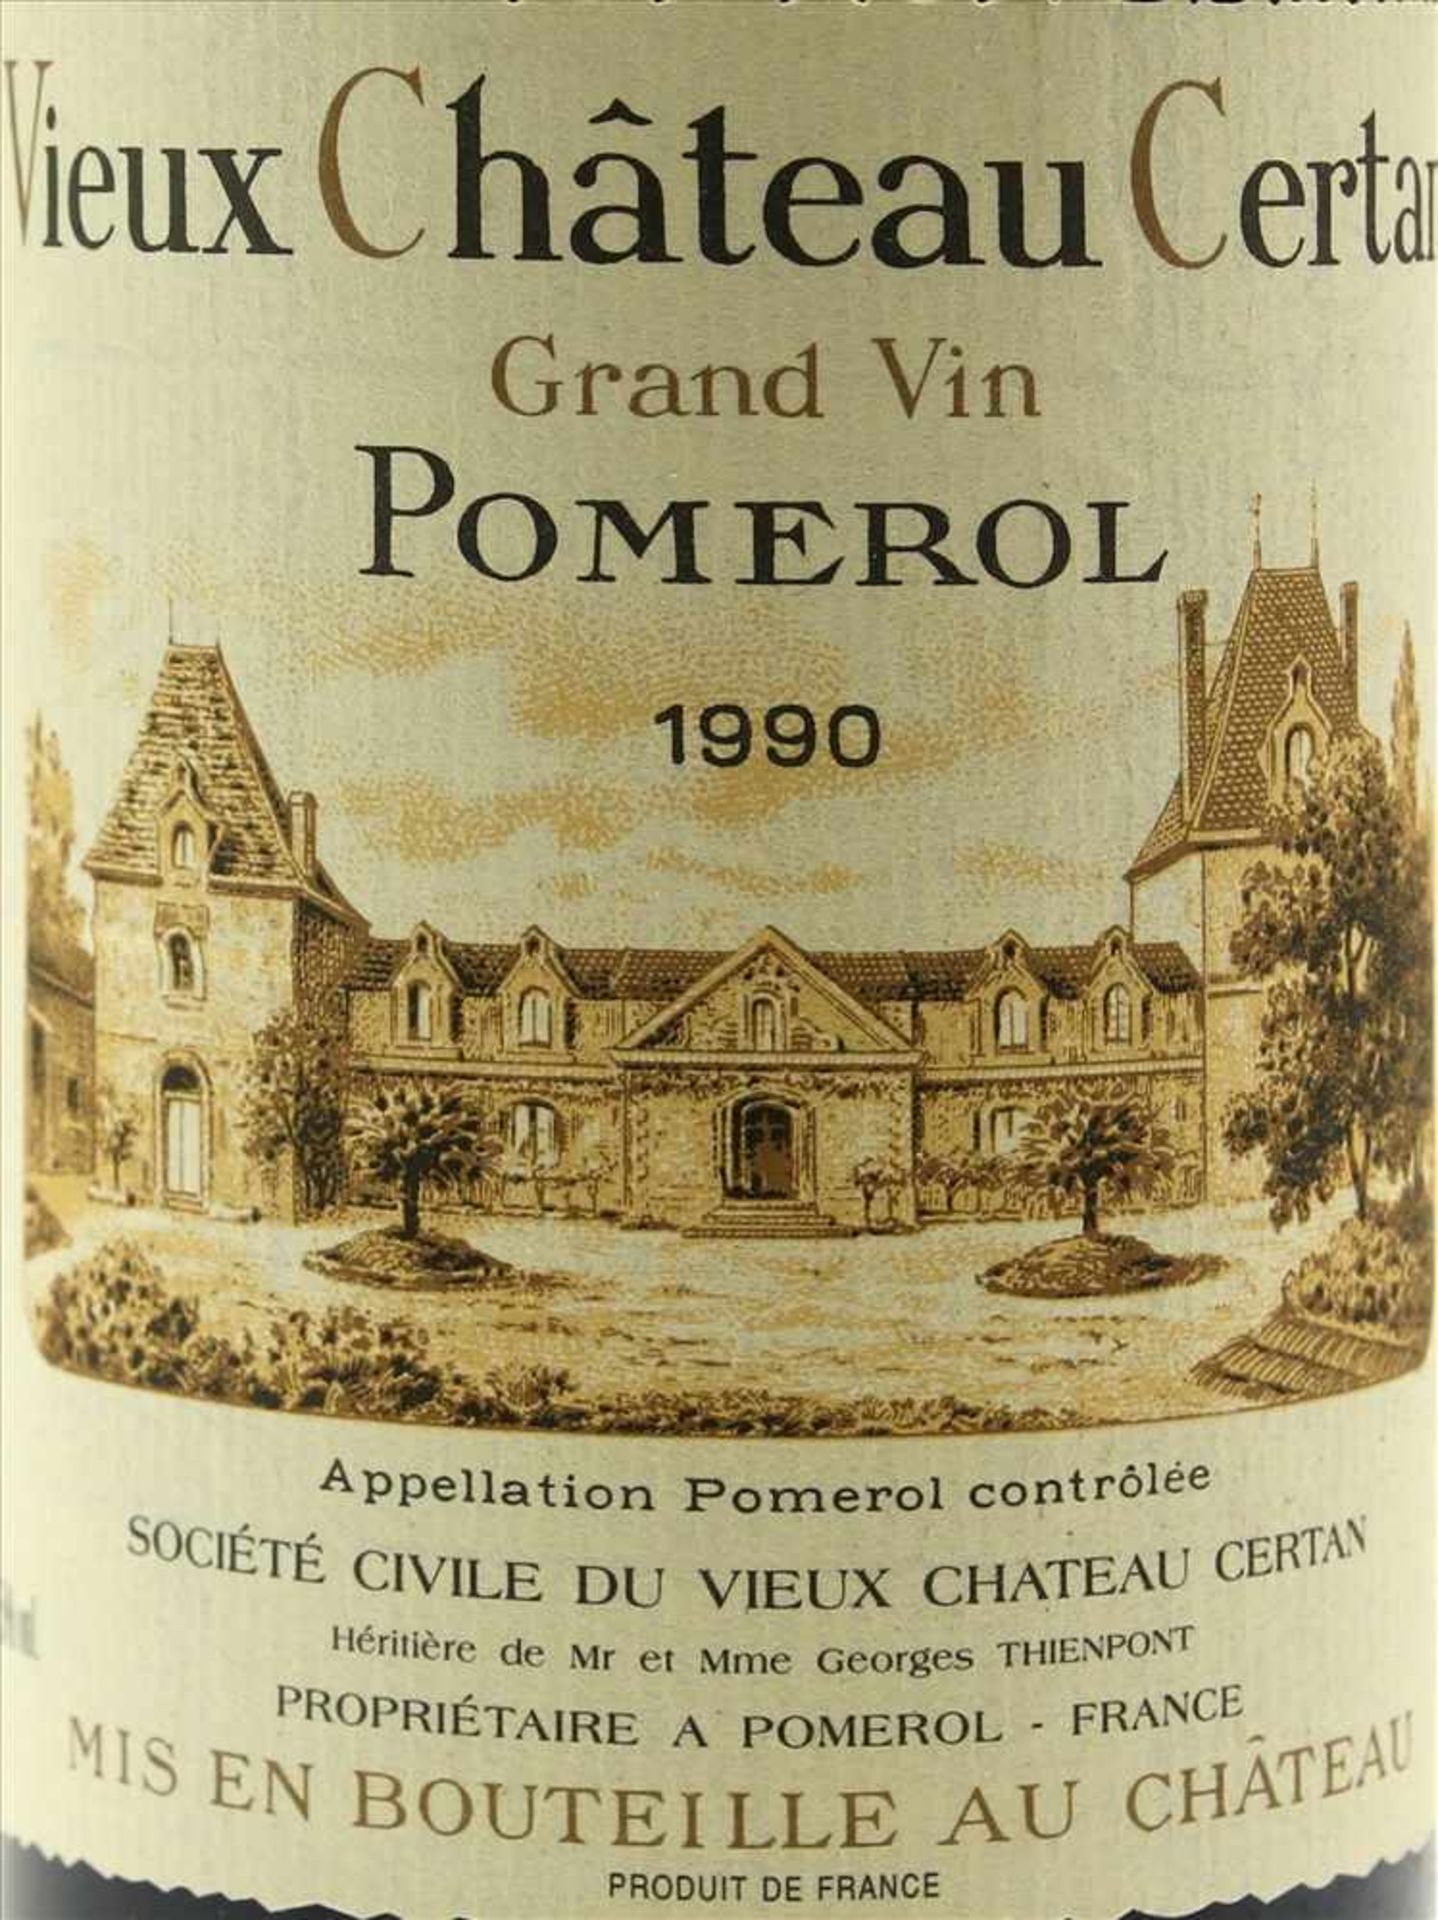 Vieux Chateau CertanPomerol Grand Vin 1990. 0,75 ltr Flasche. Füllstand Anfang Hals, Kapsel - Image 2 of 3